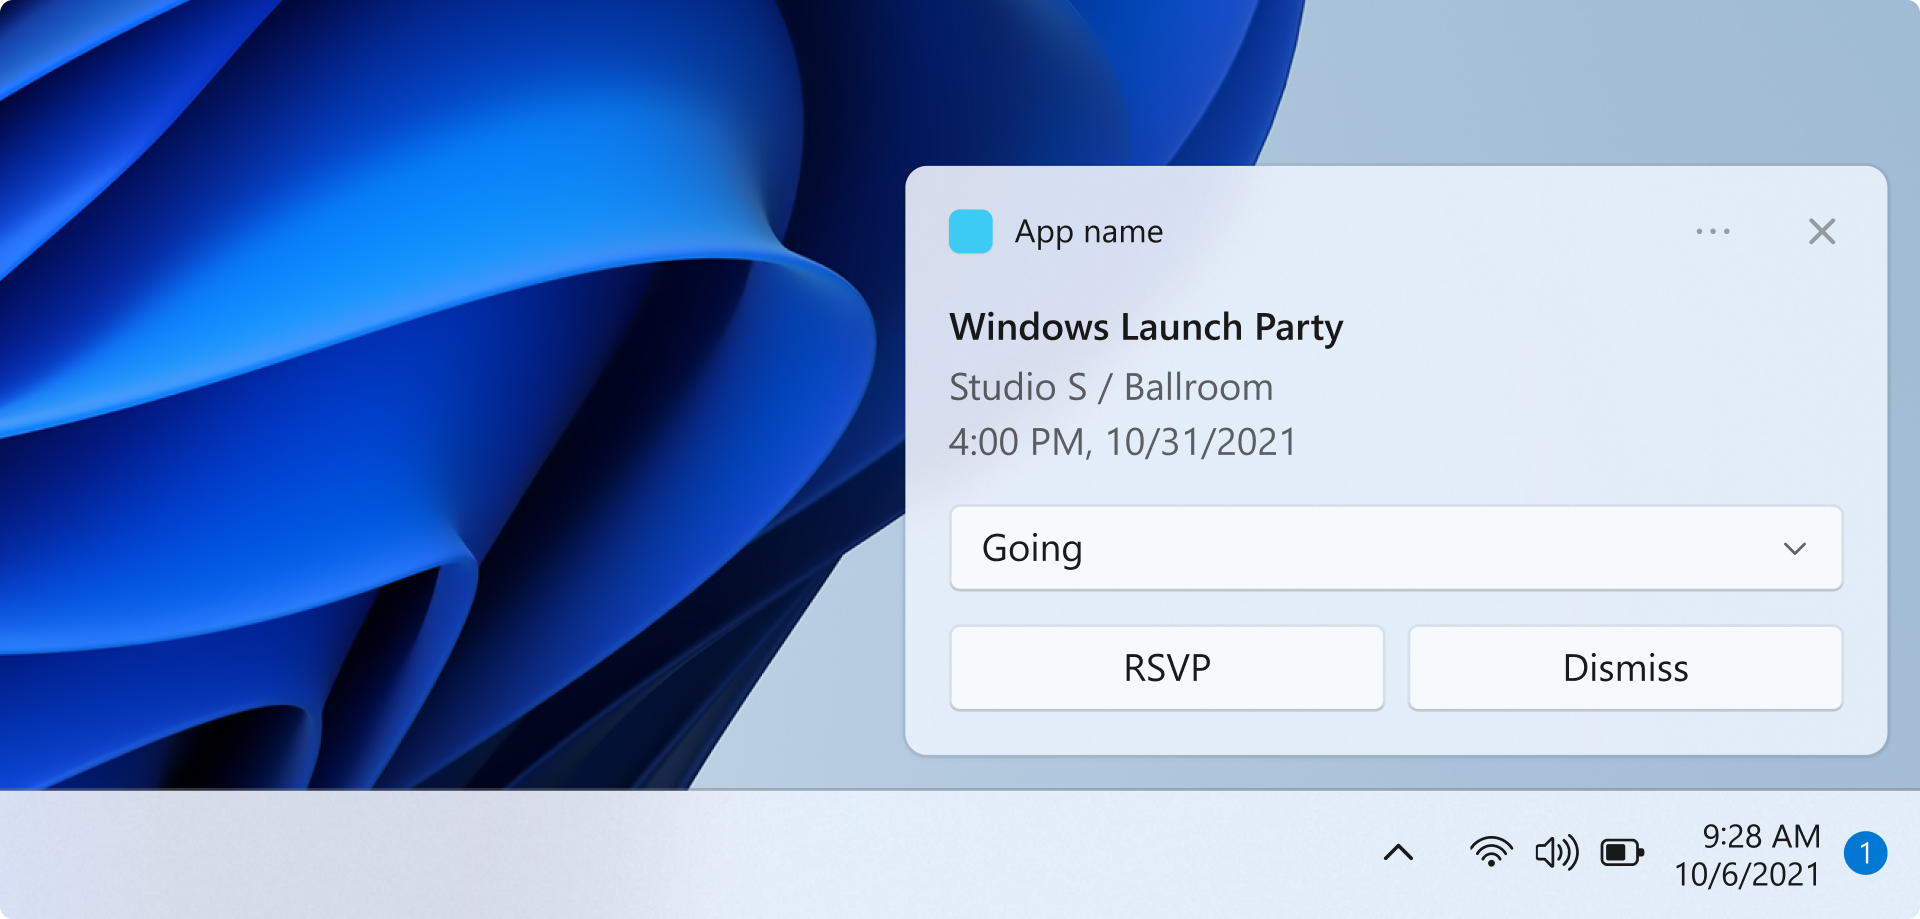 Windows 10 update notification